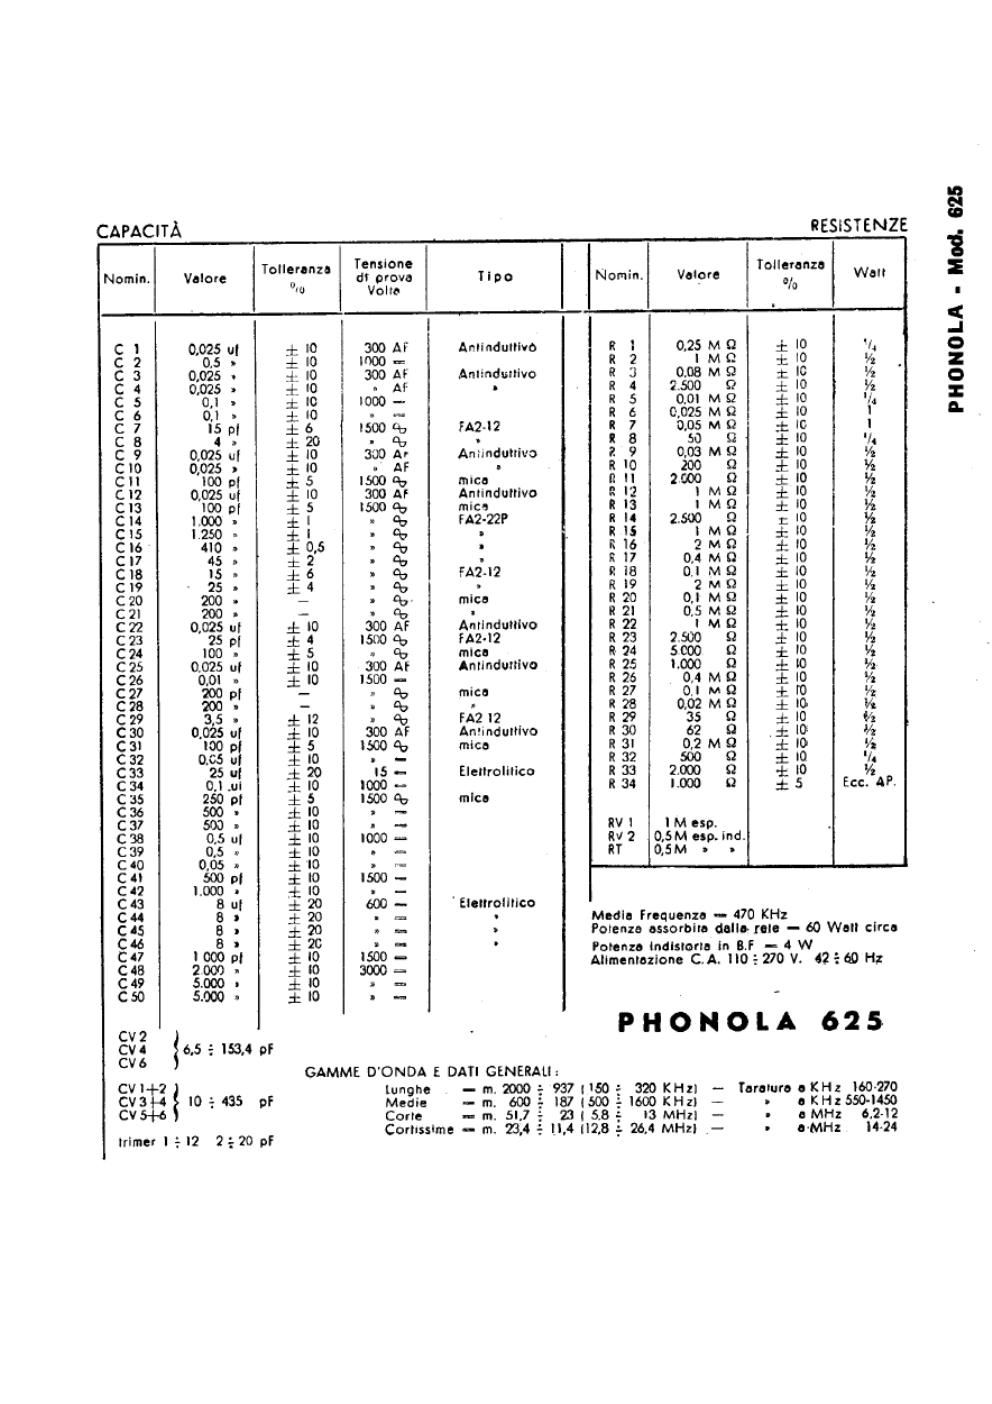 phonola 625 components